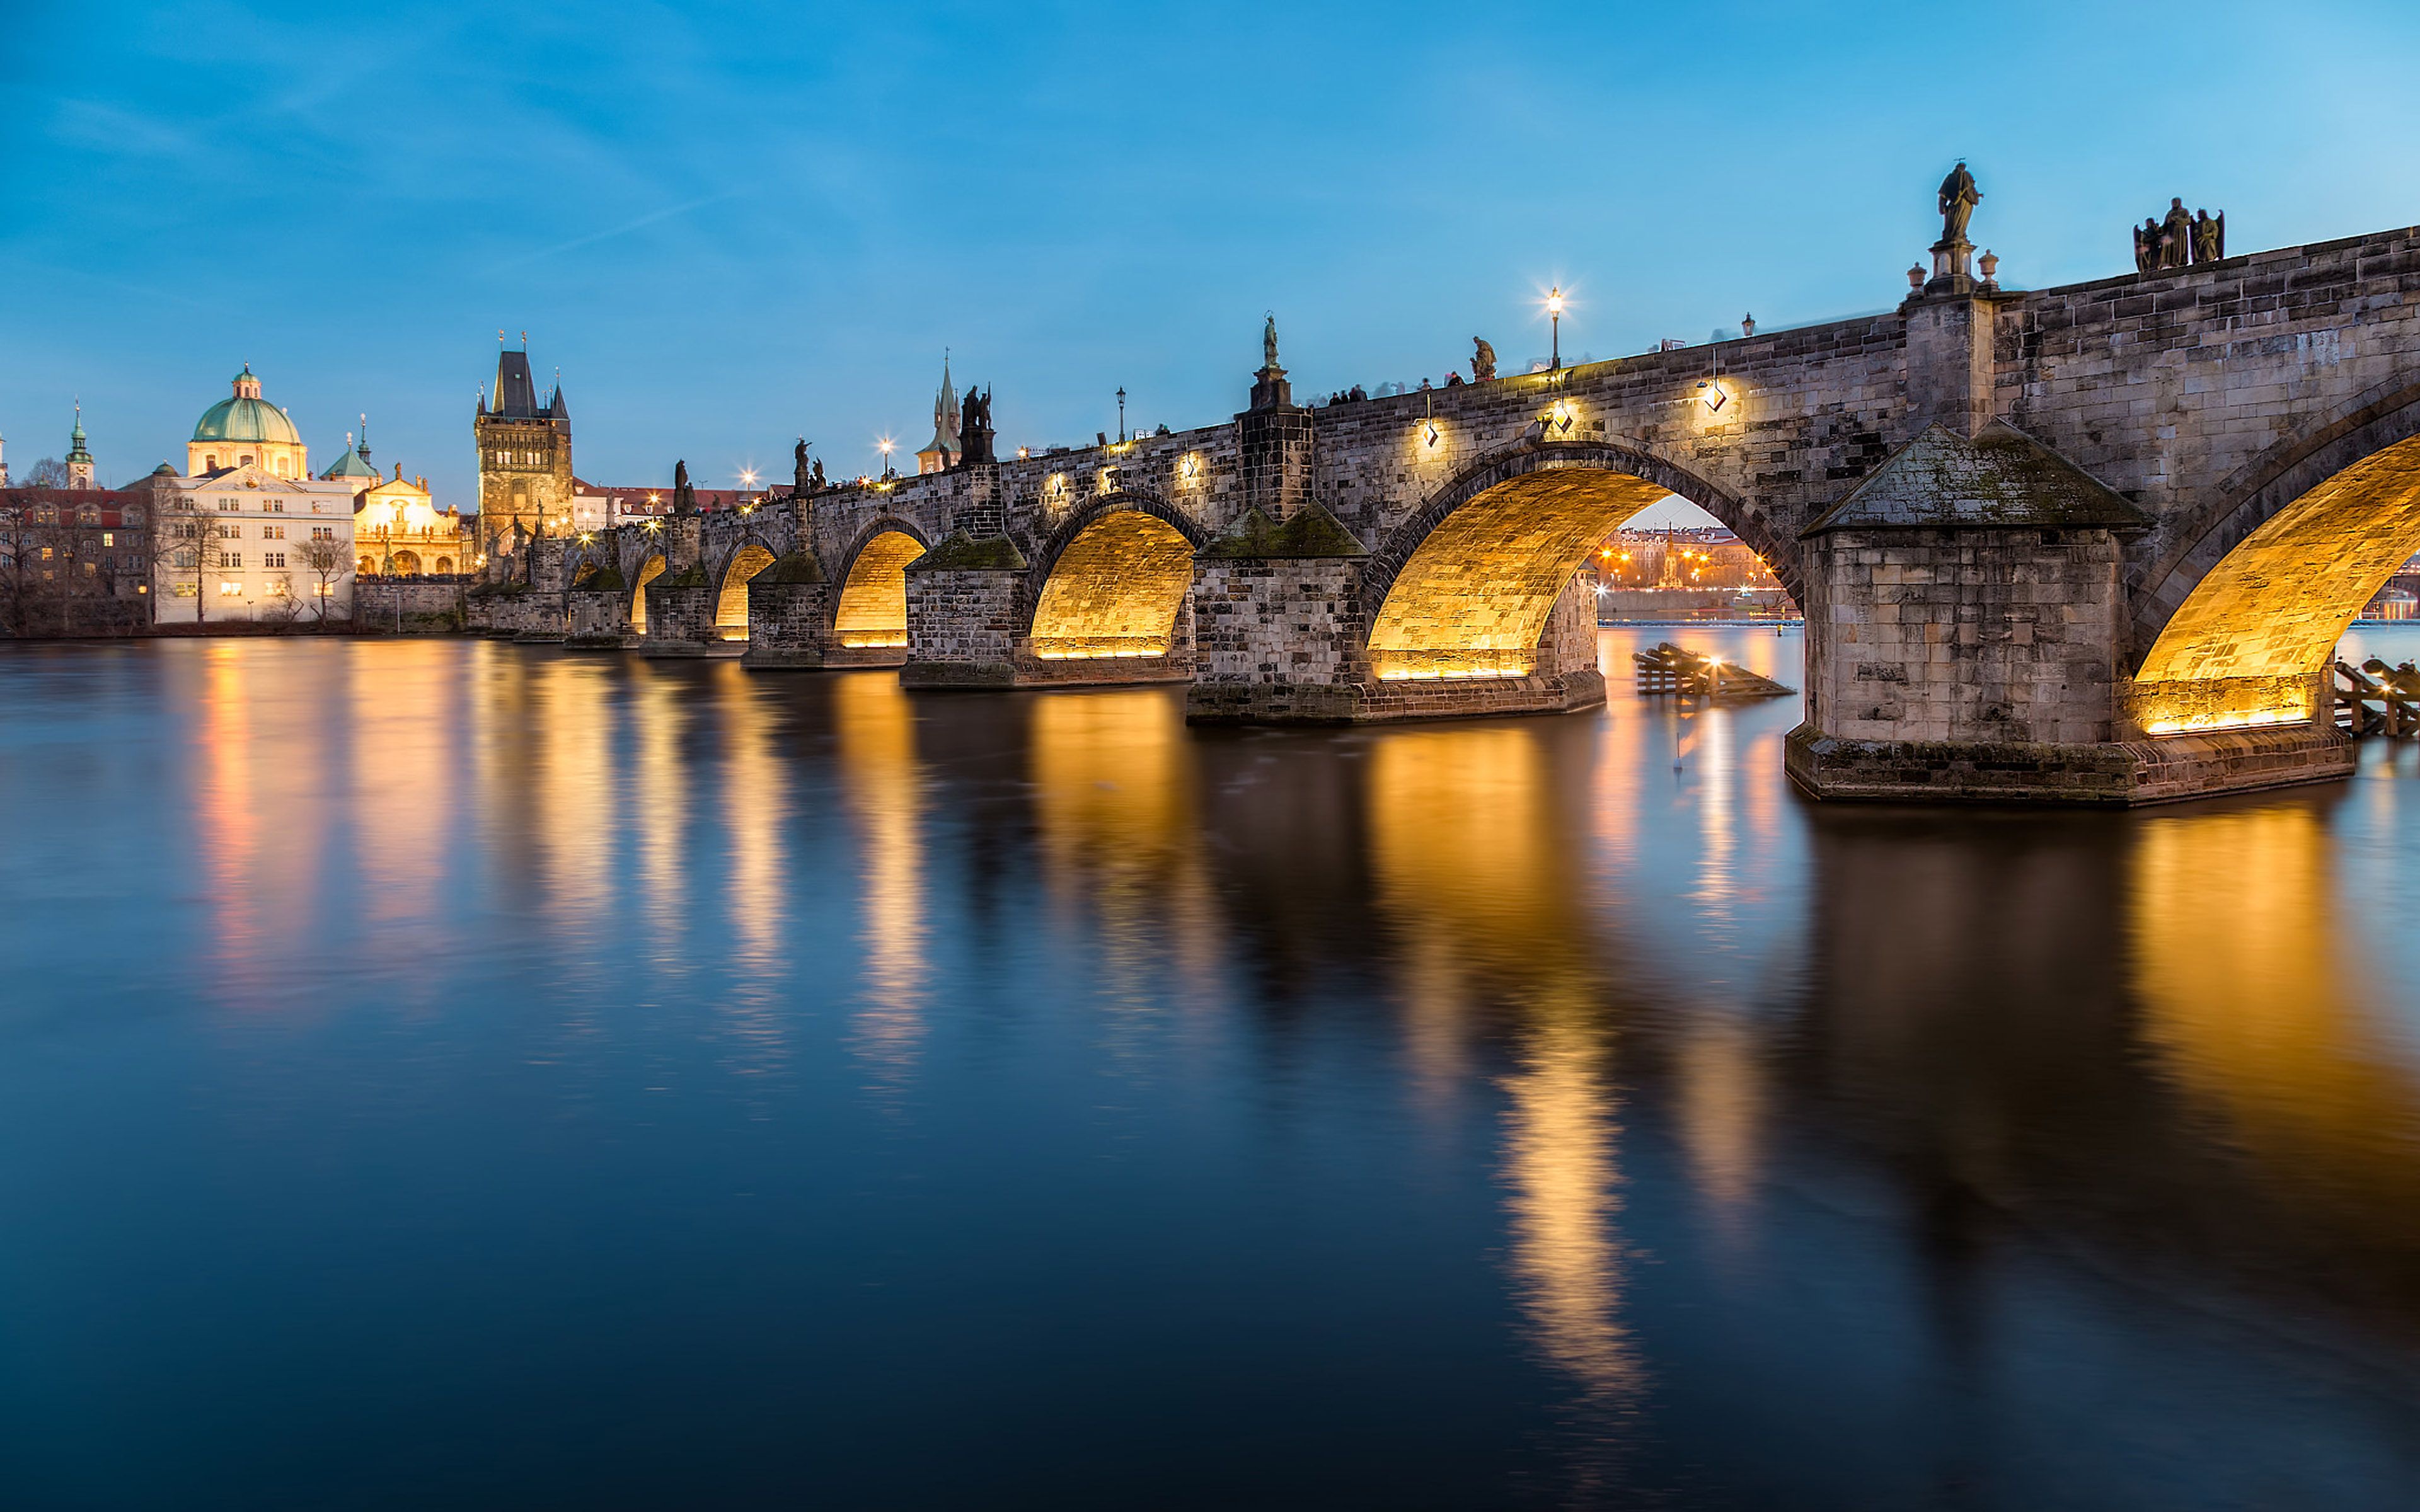 Charles Bridge Historic Bridge On The River Vltava In Prague Czech